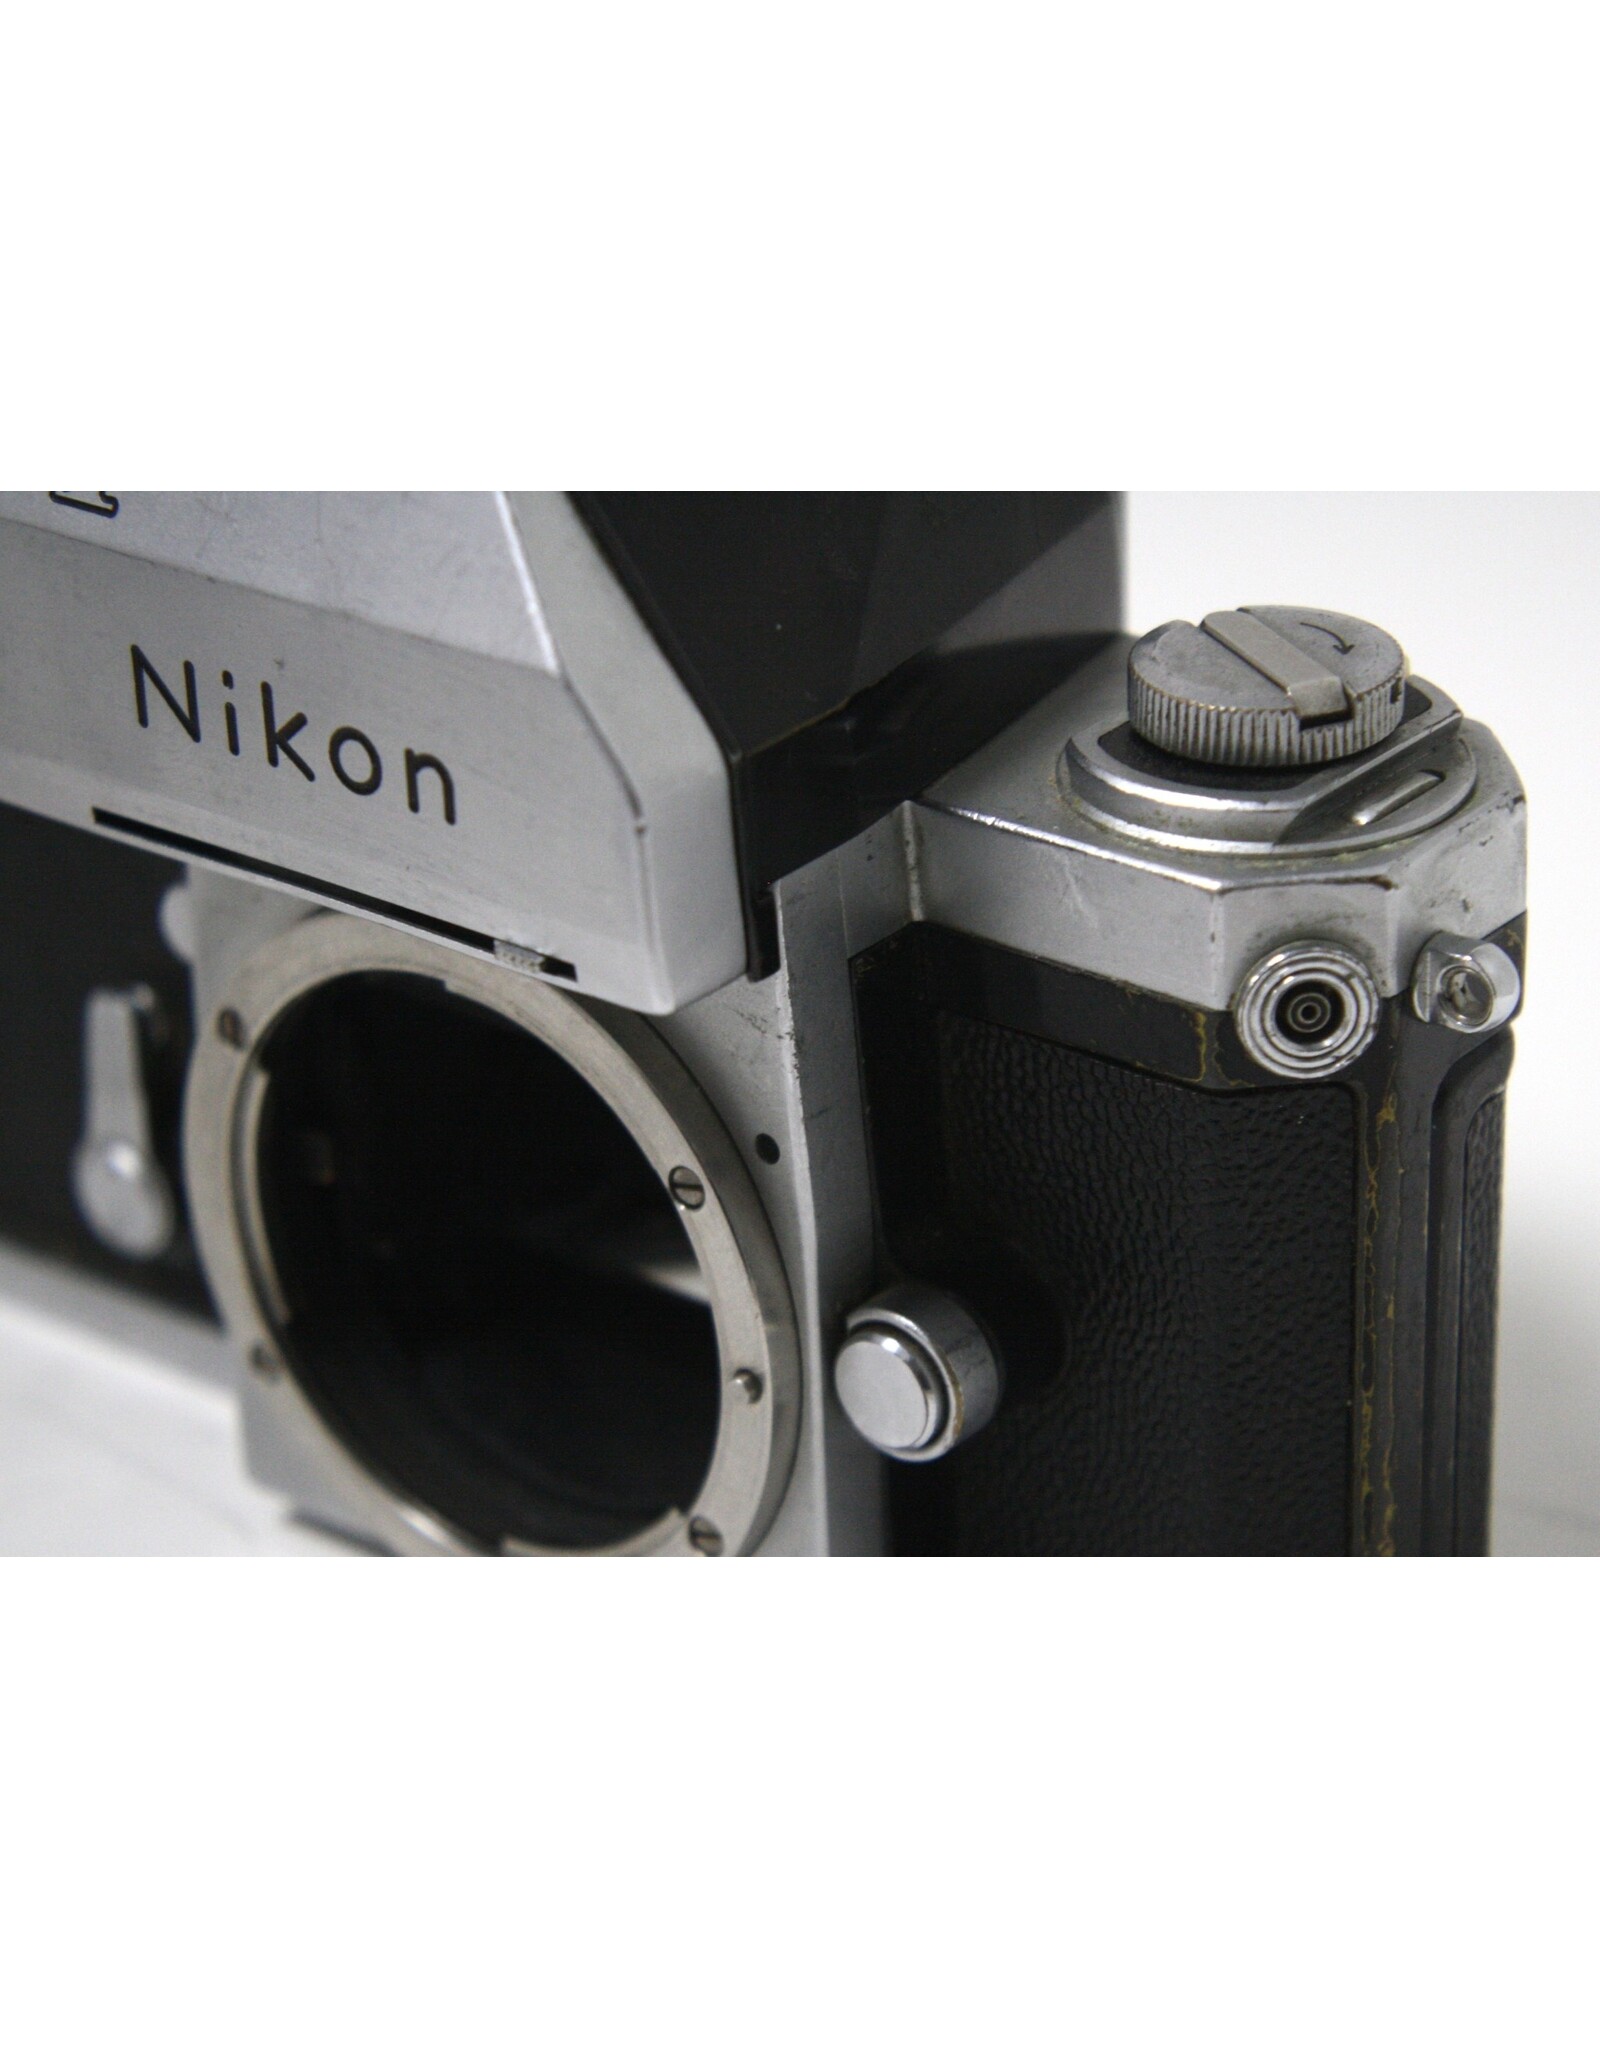 Nikon Nikon F Photomic FTn  (#003) Film Camera (Body Only) (Pre-Owned)